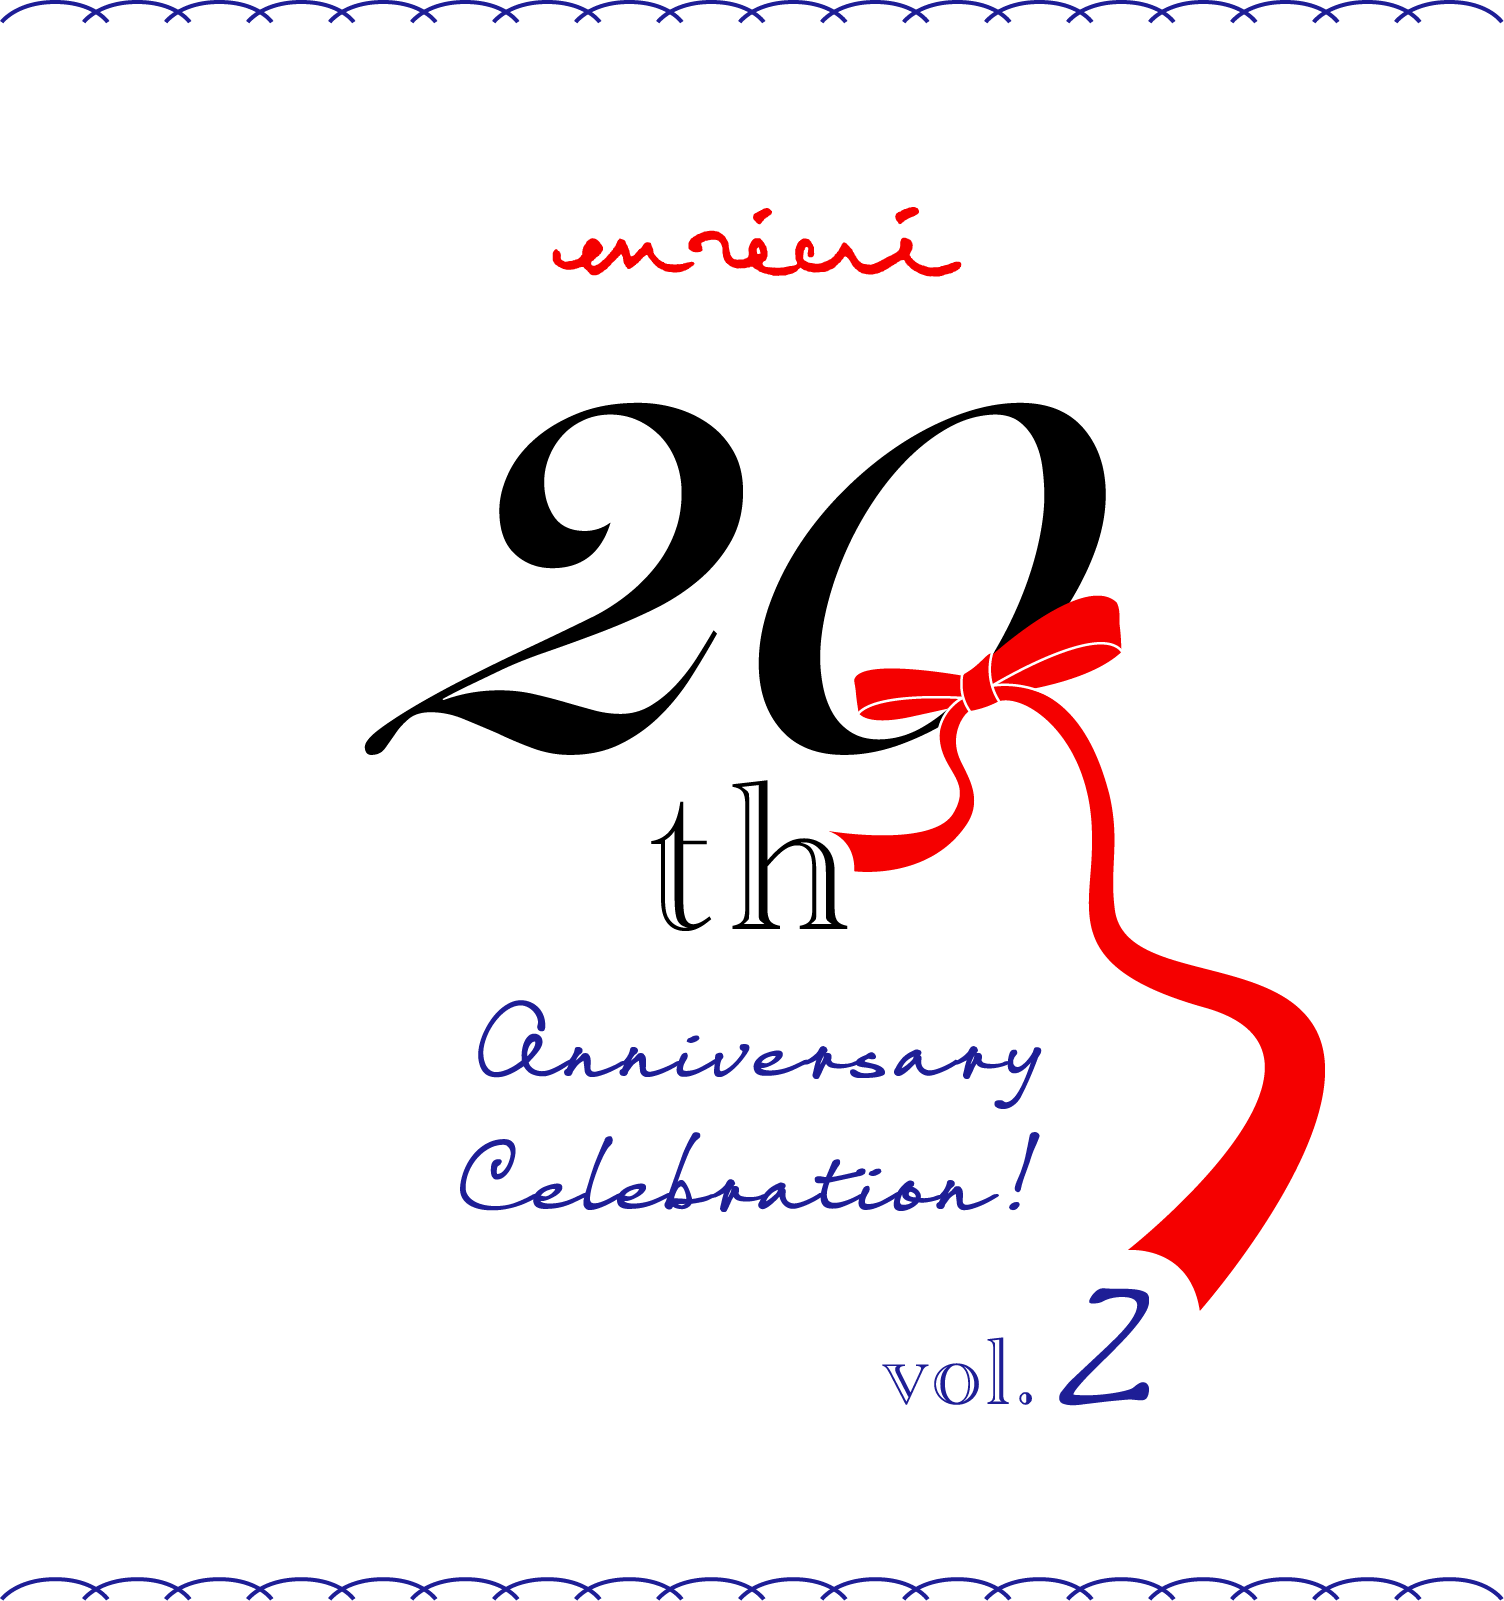 yen recrez20th anniversary celebration Vol.2